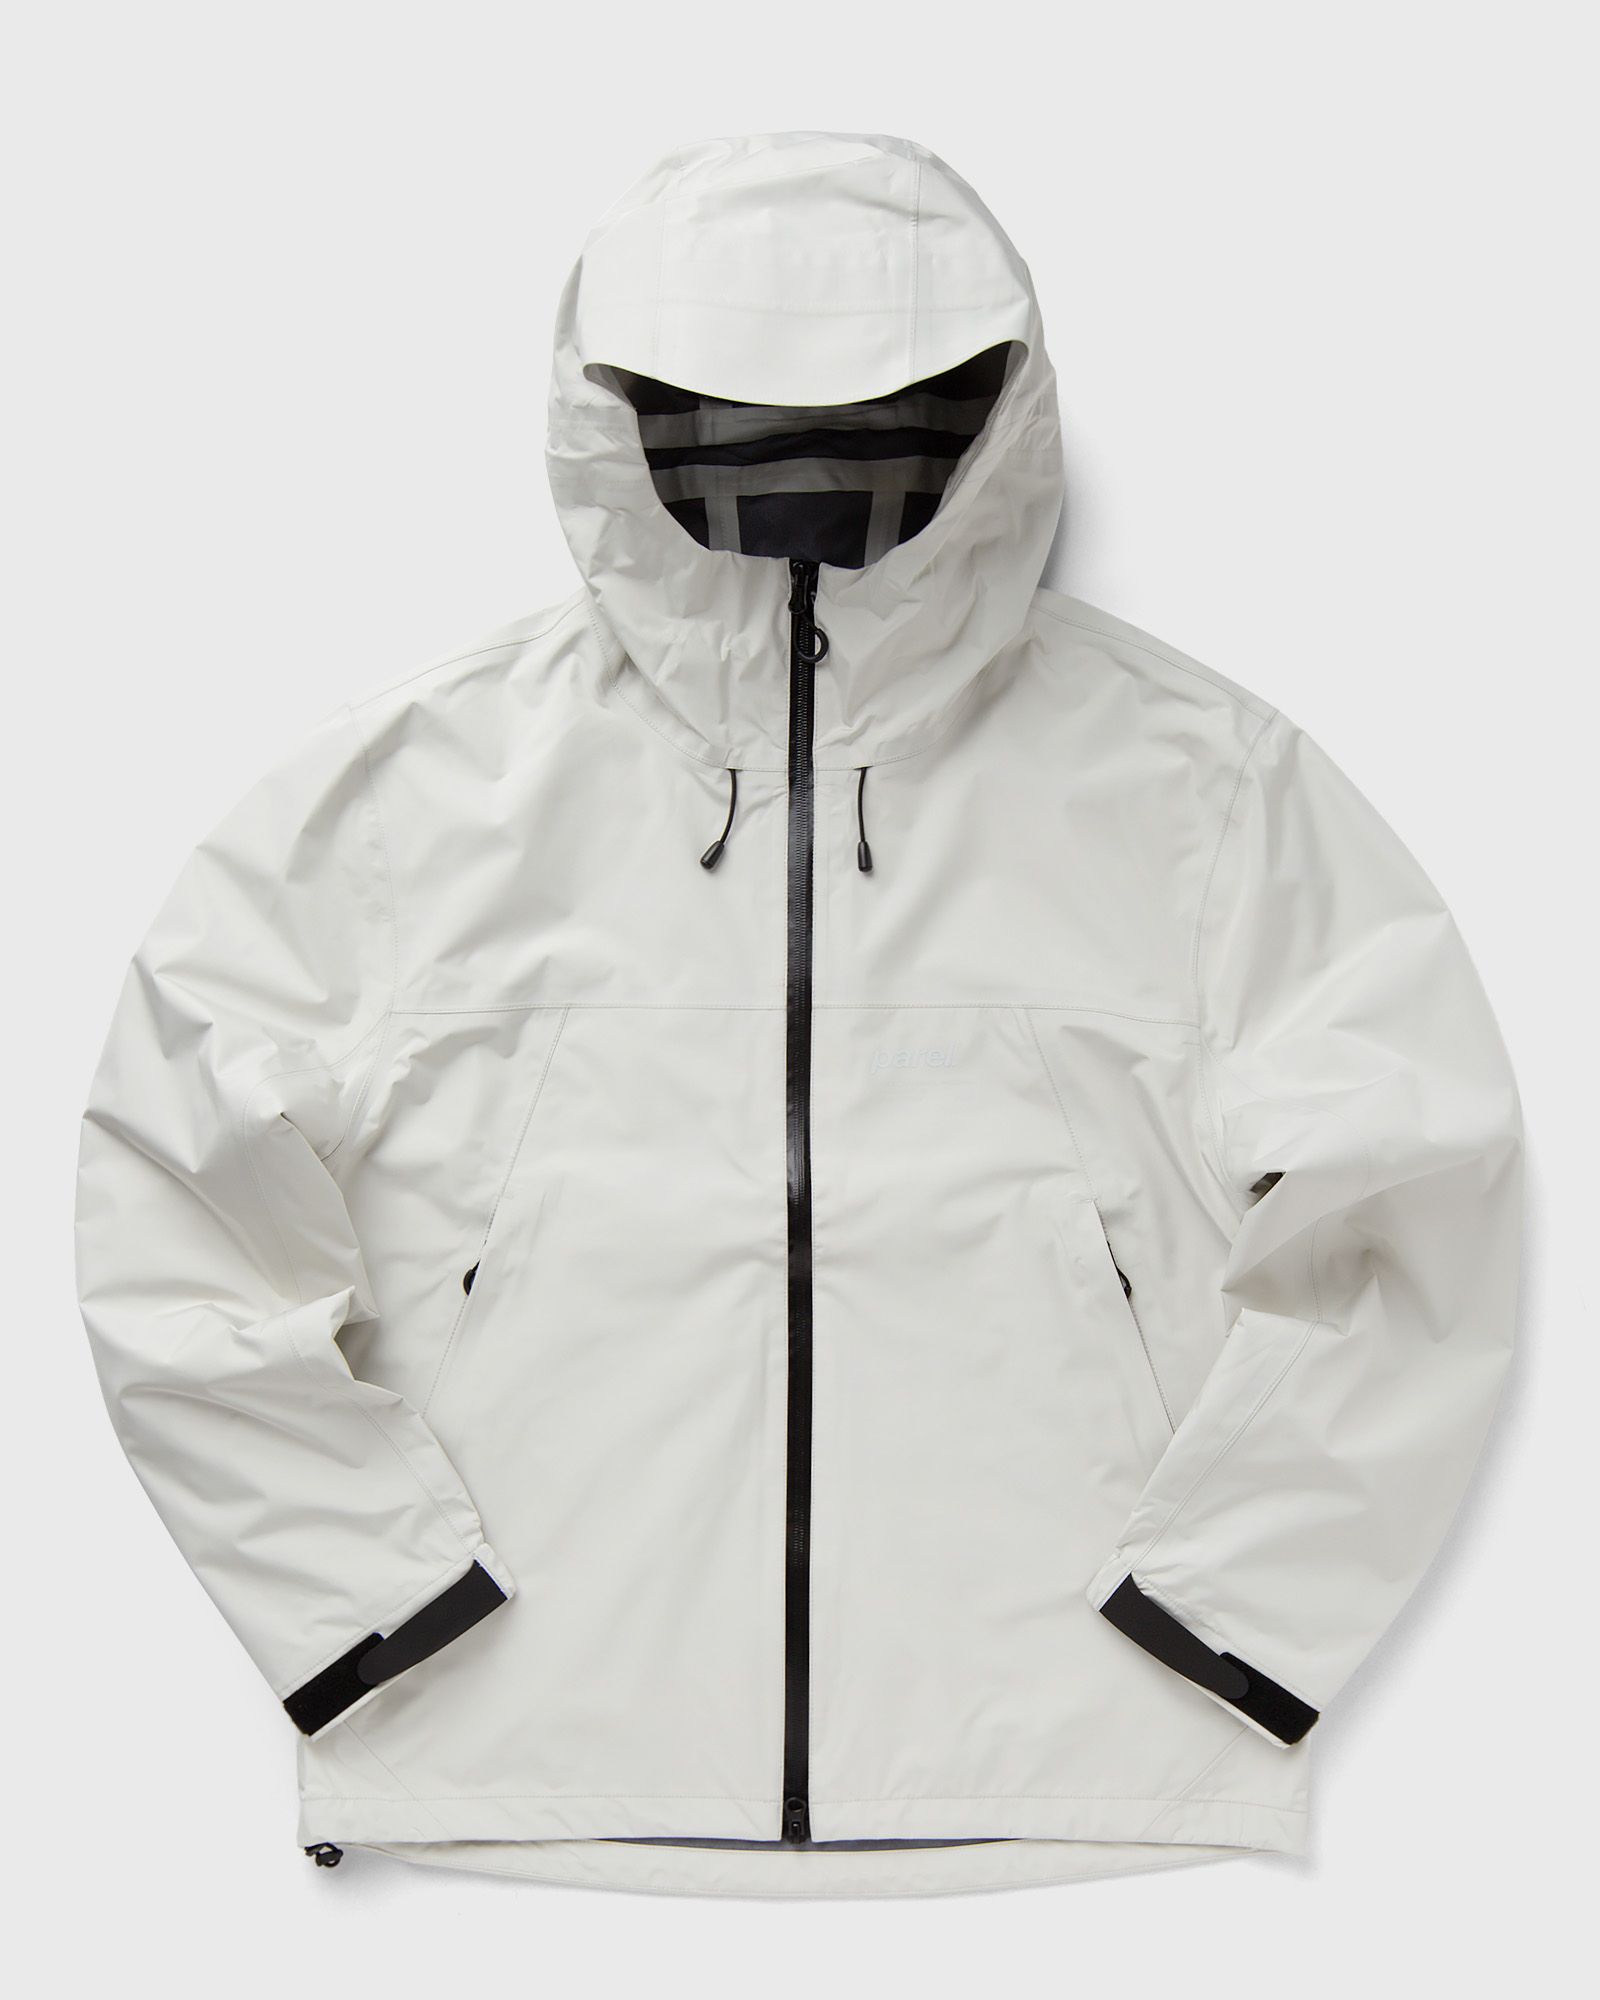 Parel studios - senja jacket men shell jackets white in größe:xl